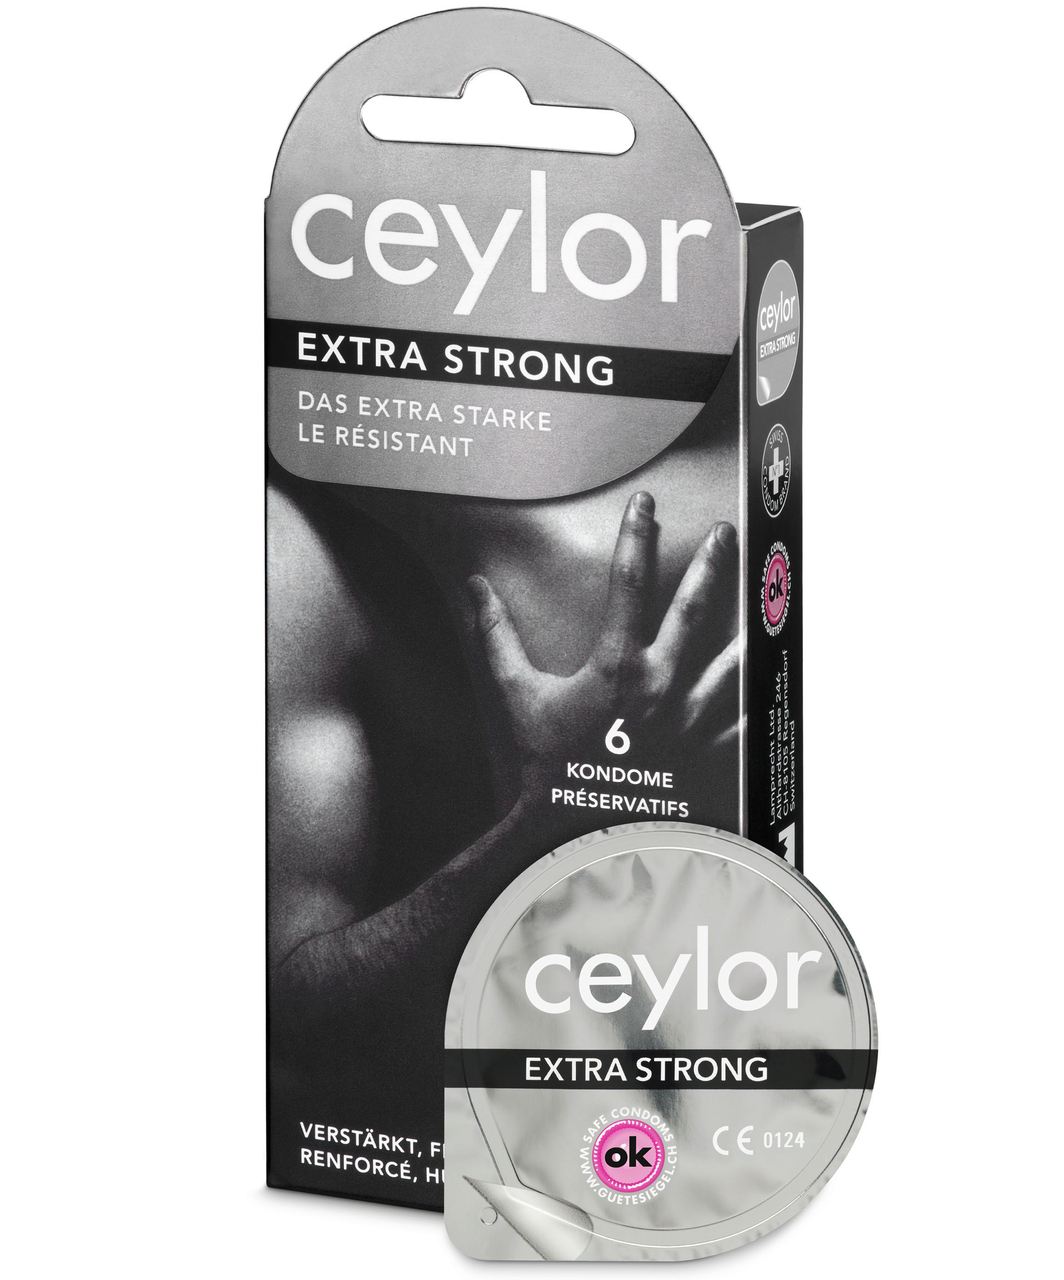 Ceylor Extra Strong презервативы (6 шт.)